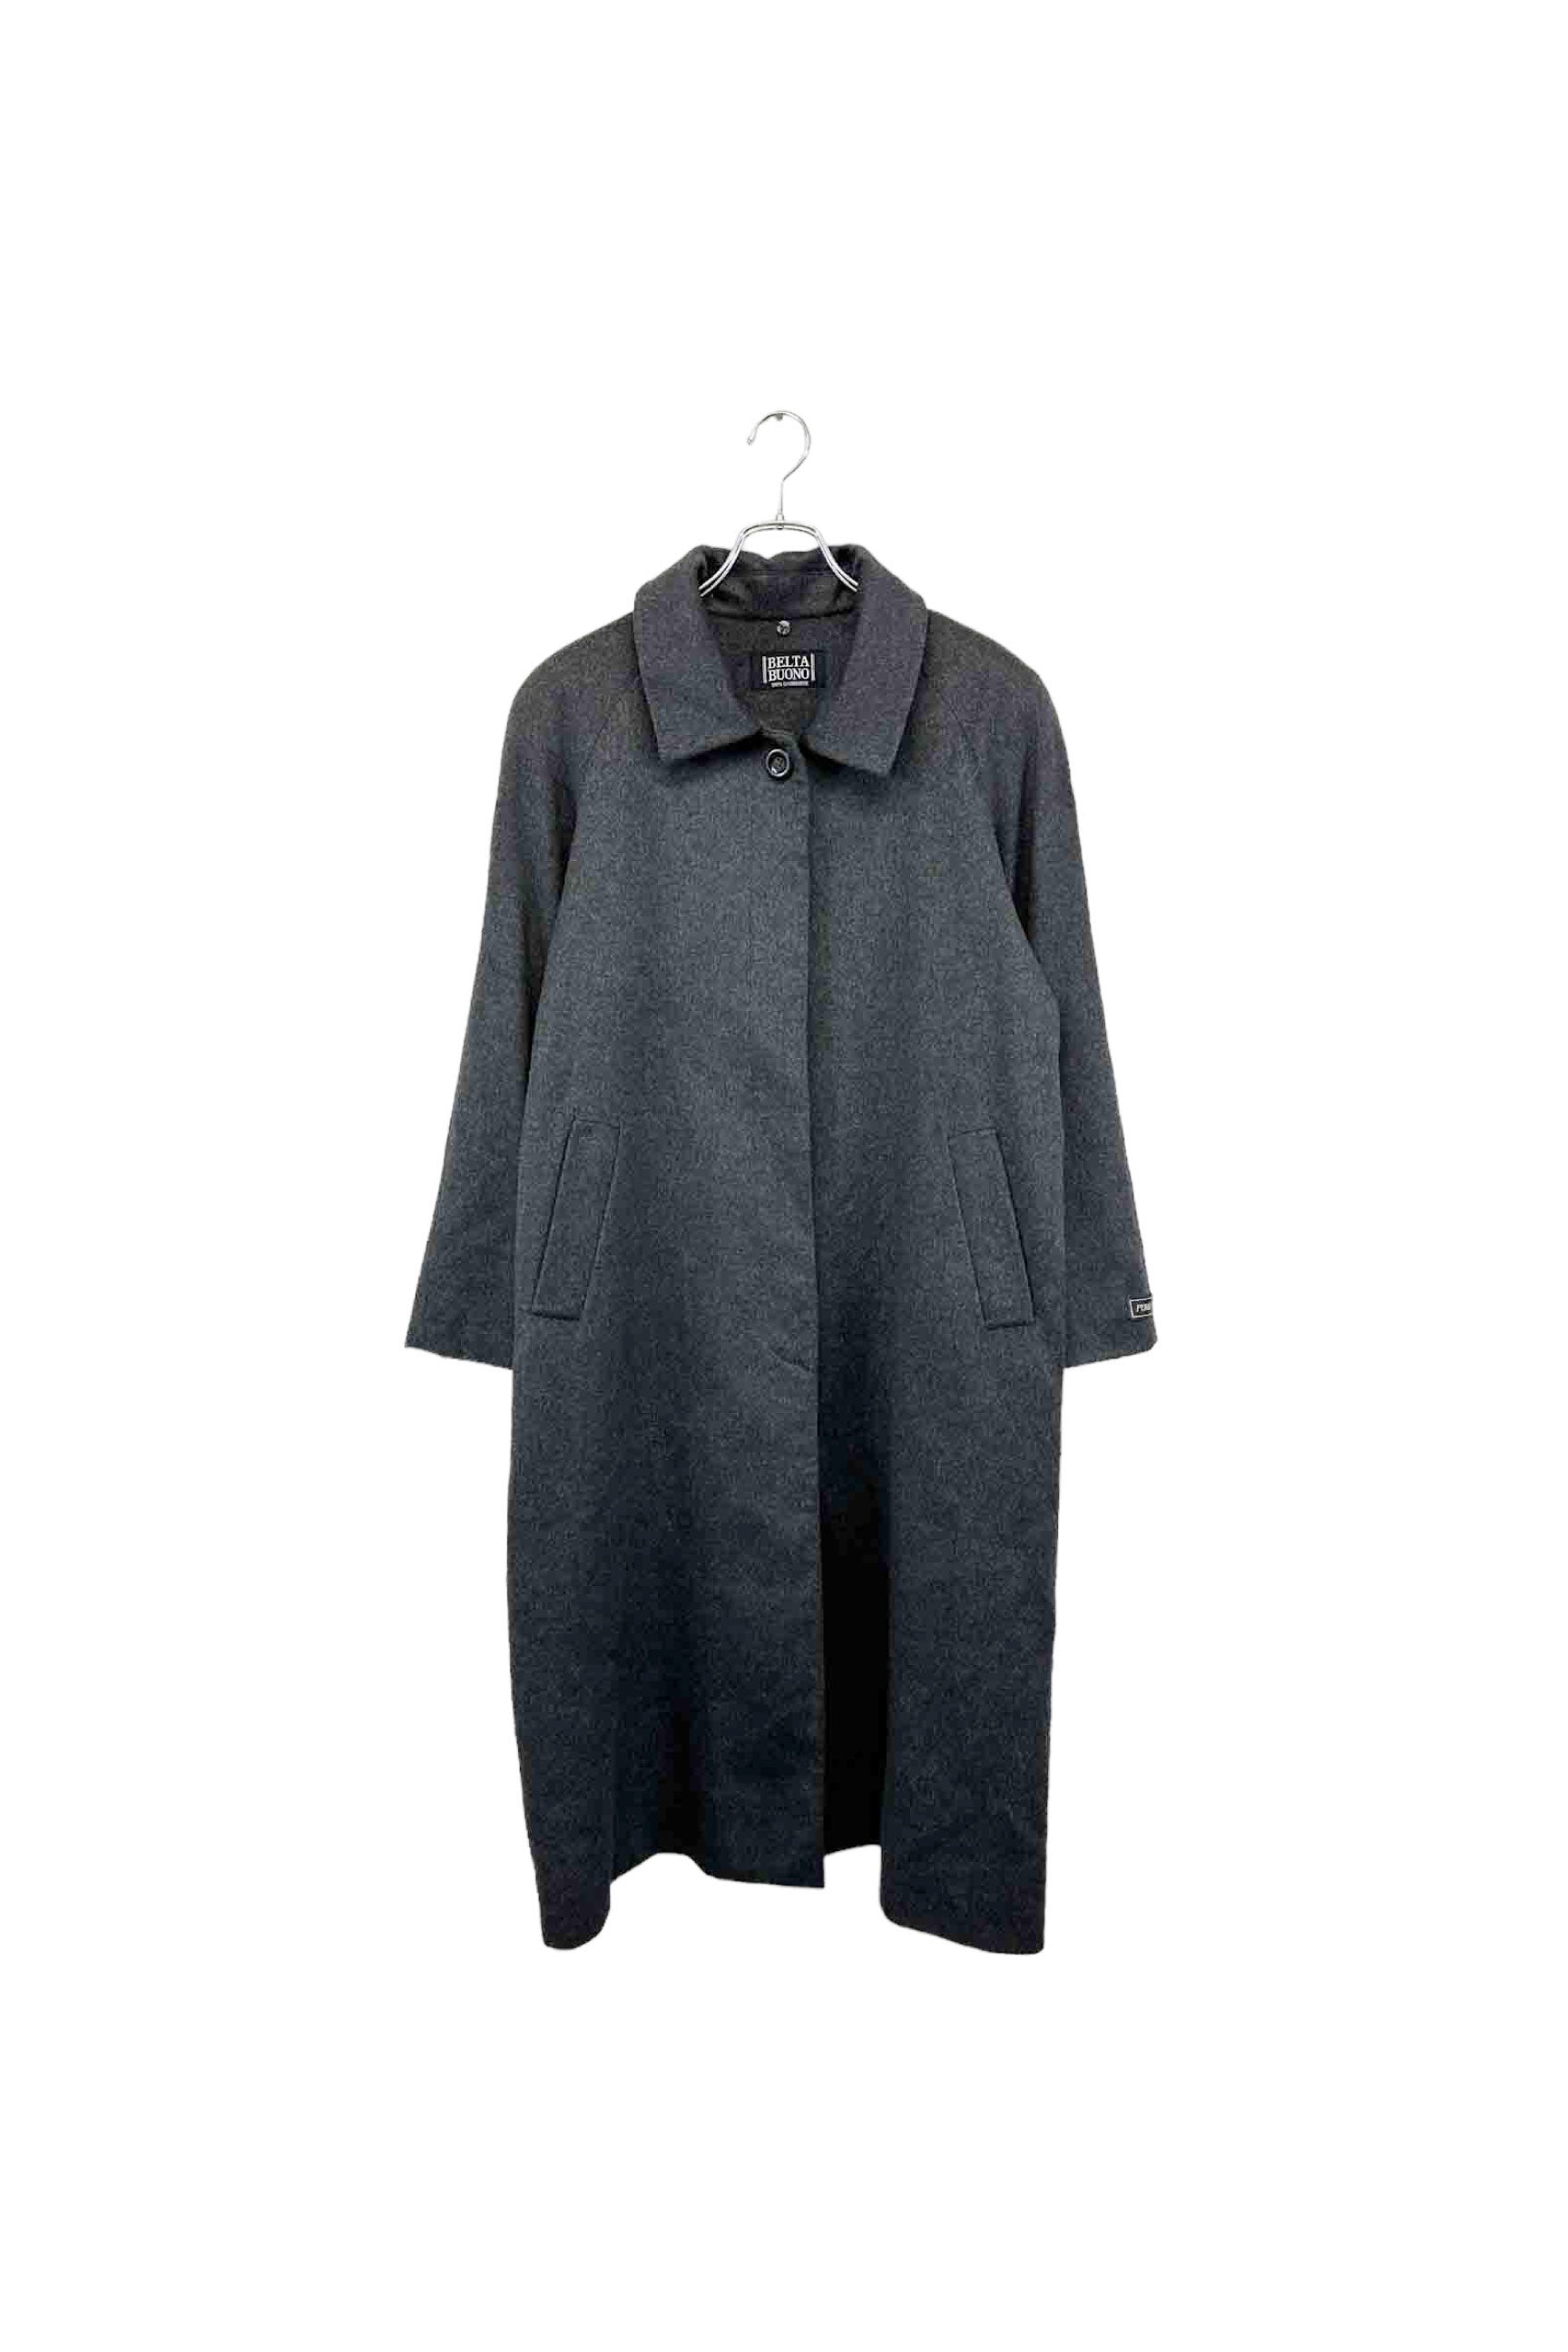 BELTA BUONO/cashmere blend long coat